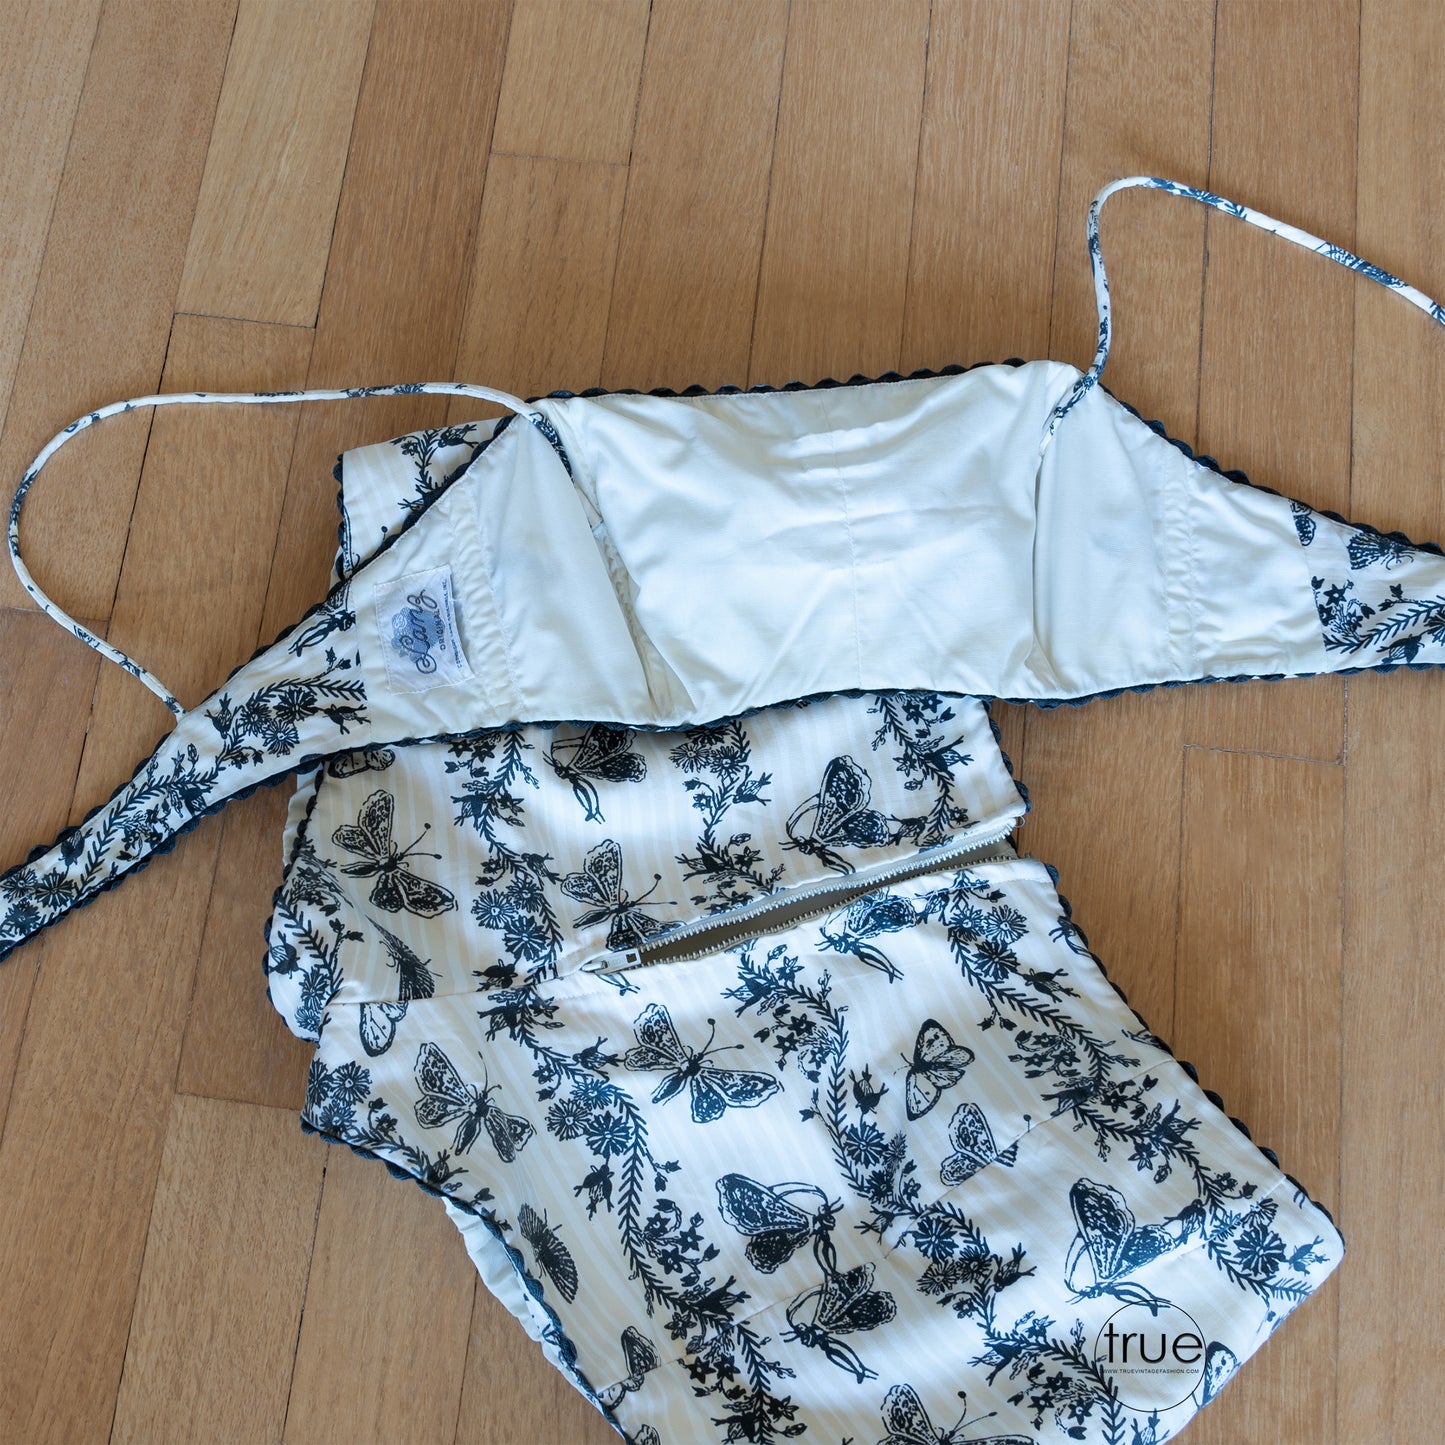 vintage 1950's swimsuit playsuit ...rare nornie LANZ original butterfly print swimsuit playsuit